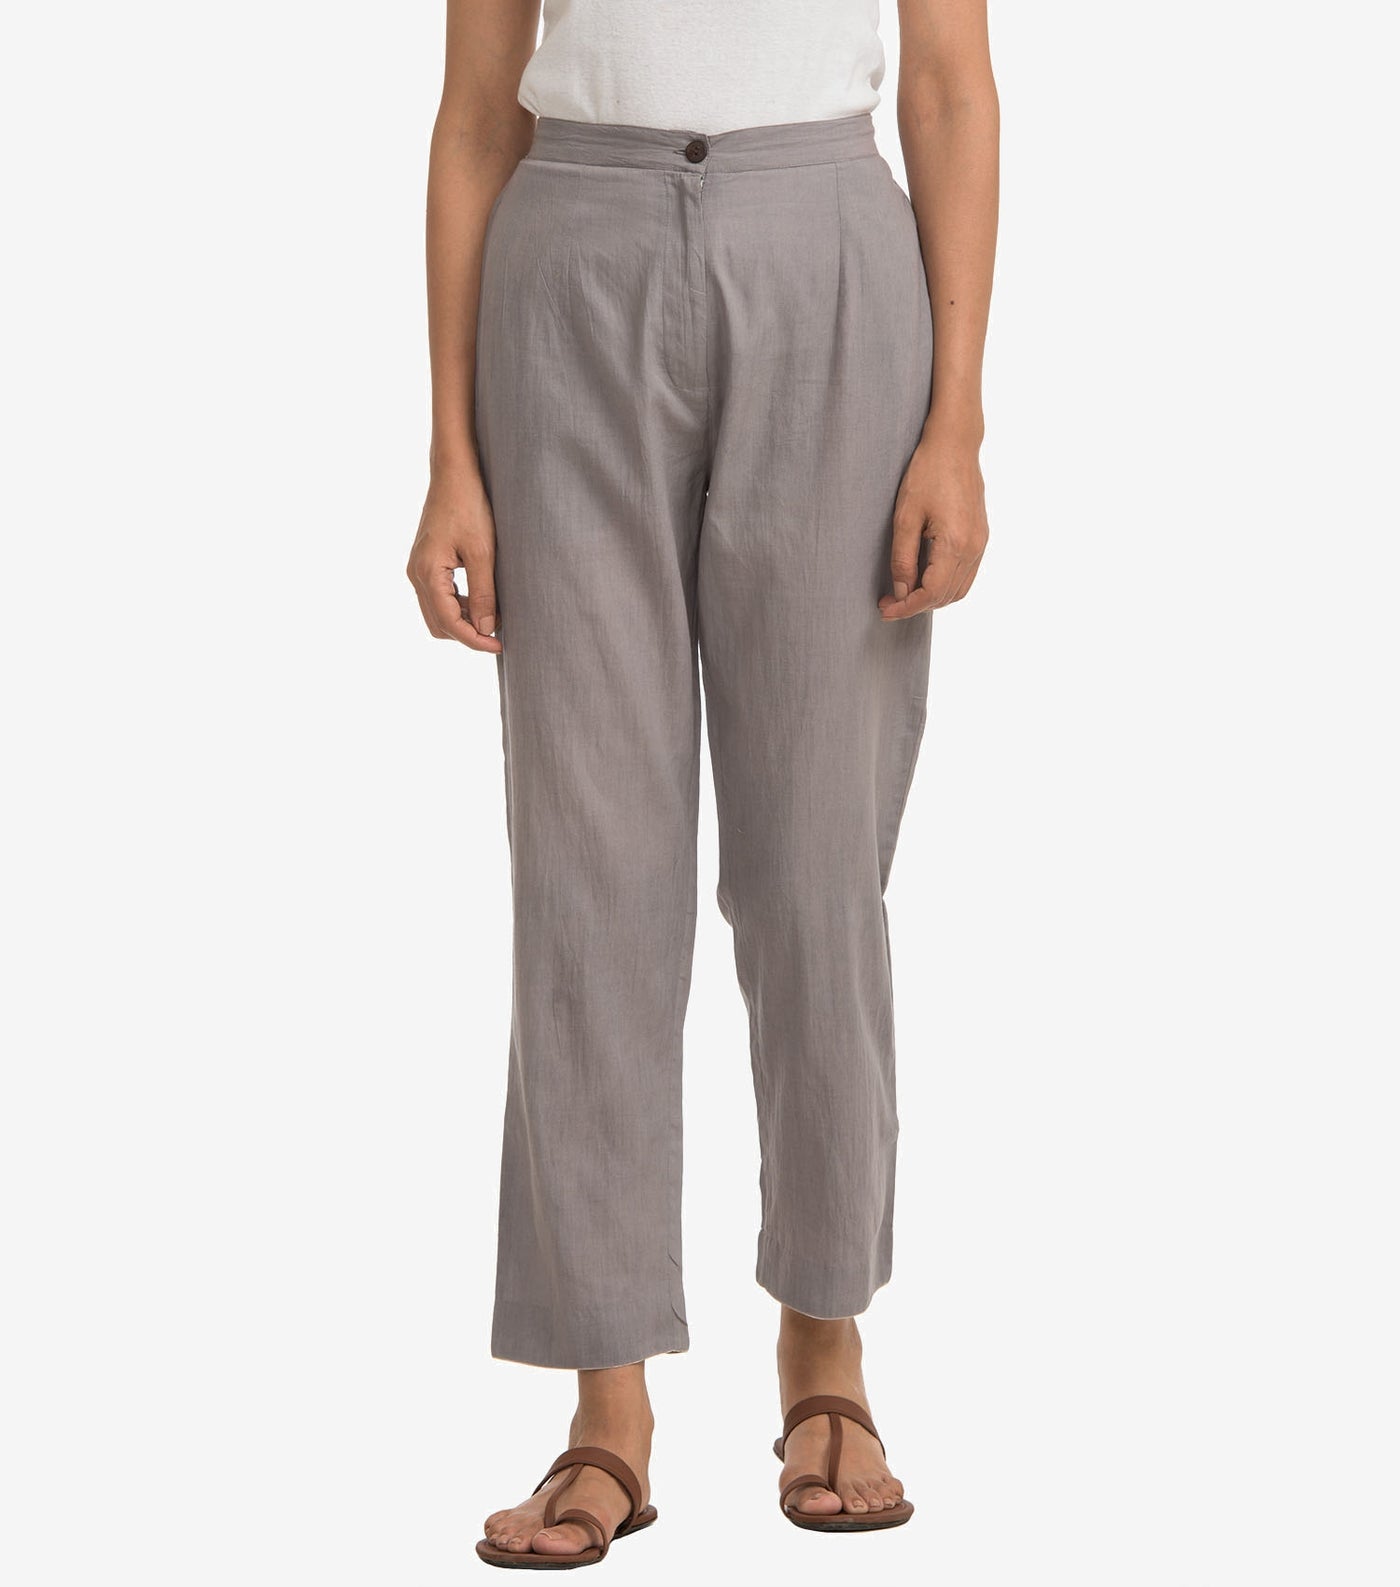 Grey cambric pants